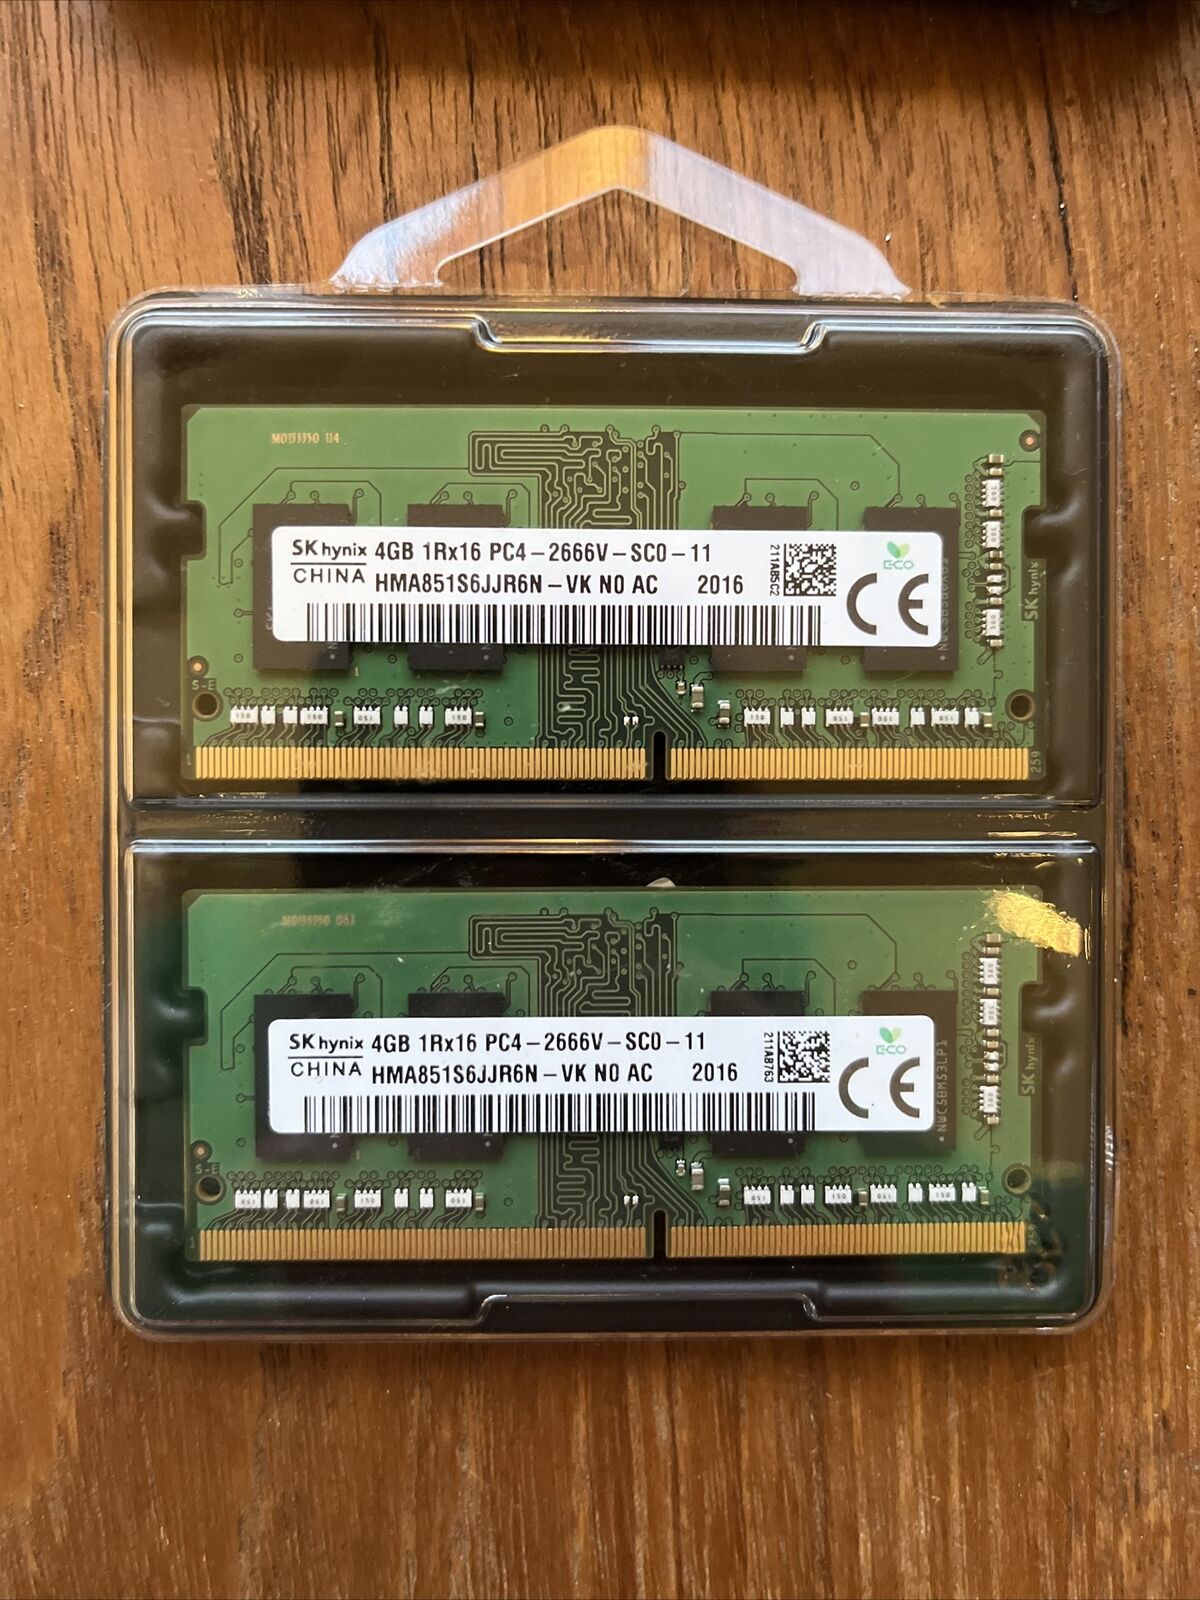 SK Hynix PC4-2666V 4GB Ram DDR4 2666MHz SODIMM Laptop Memory RAM - Set of Two